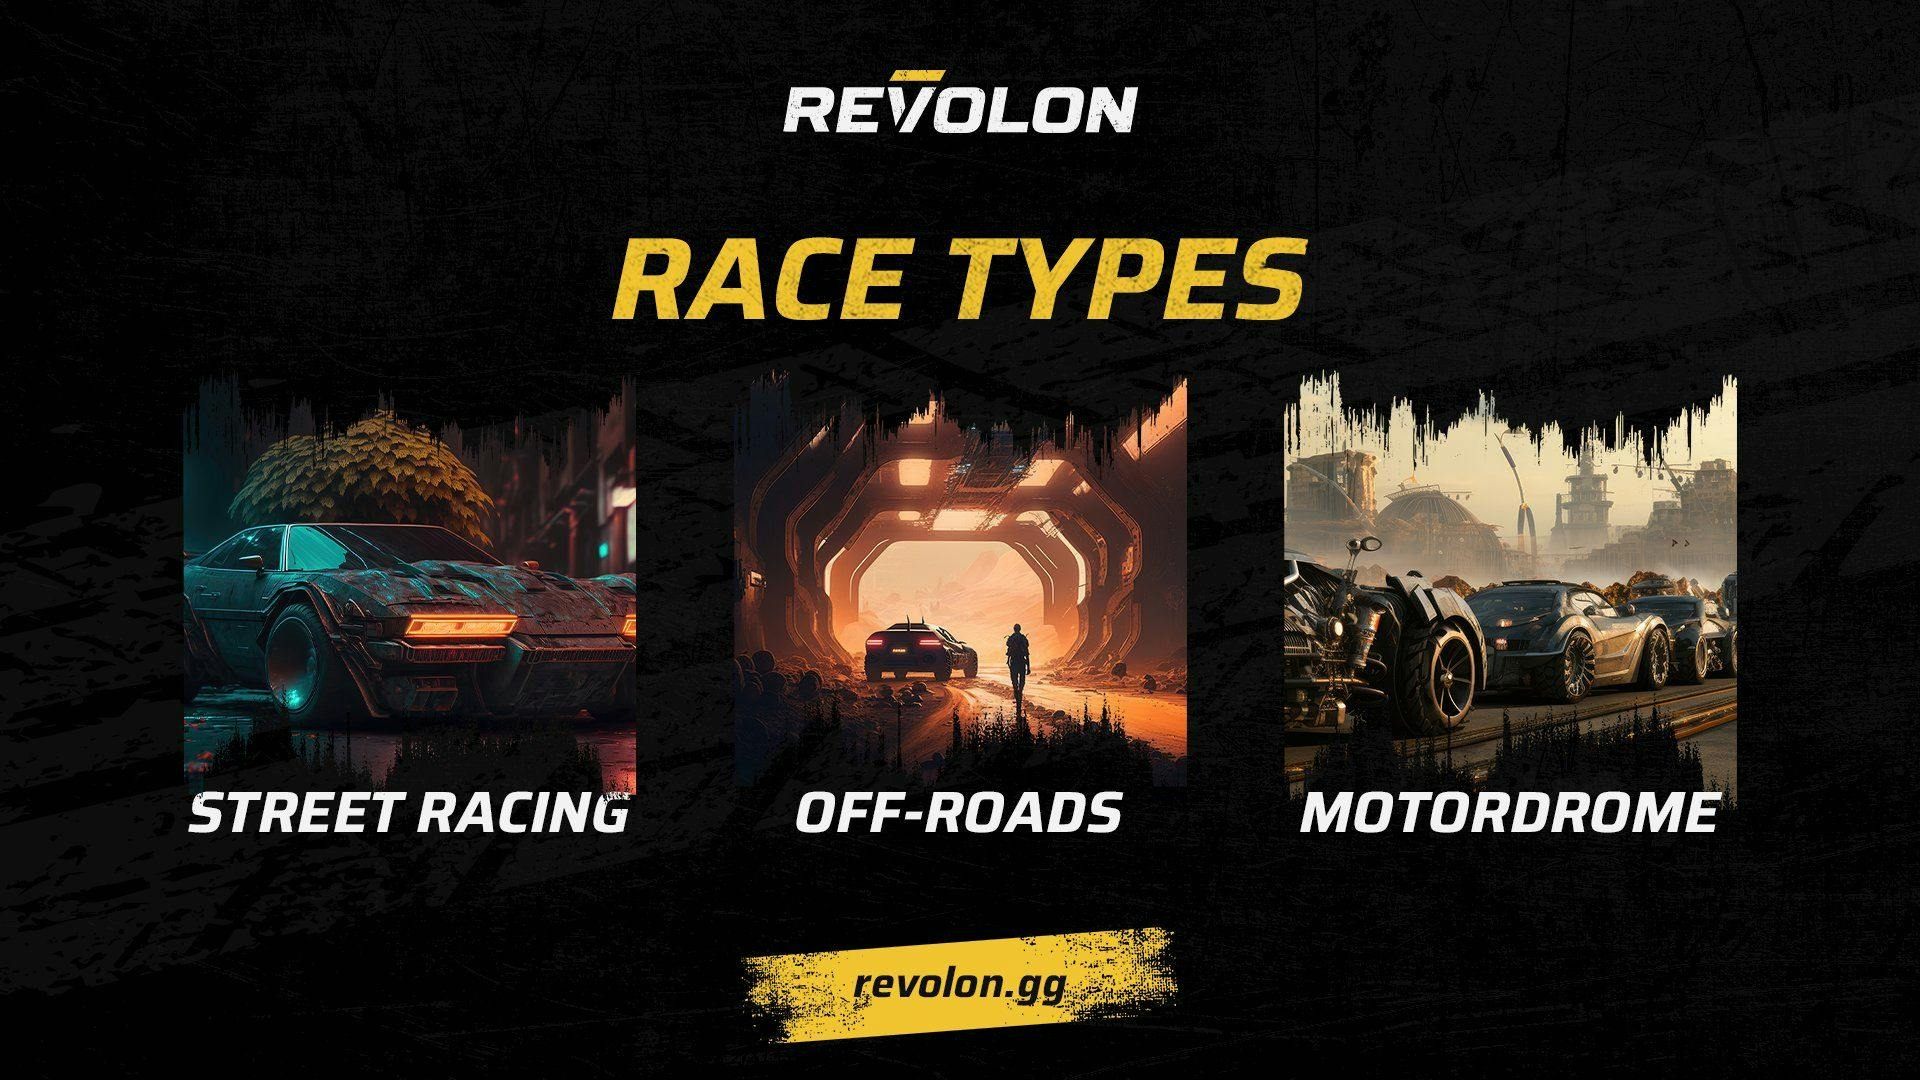 Revolon game image3.jpg